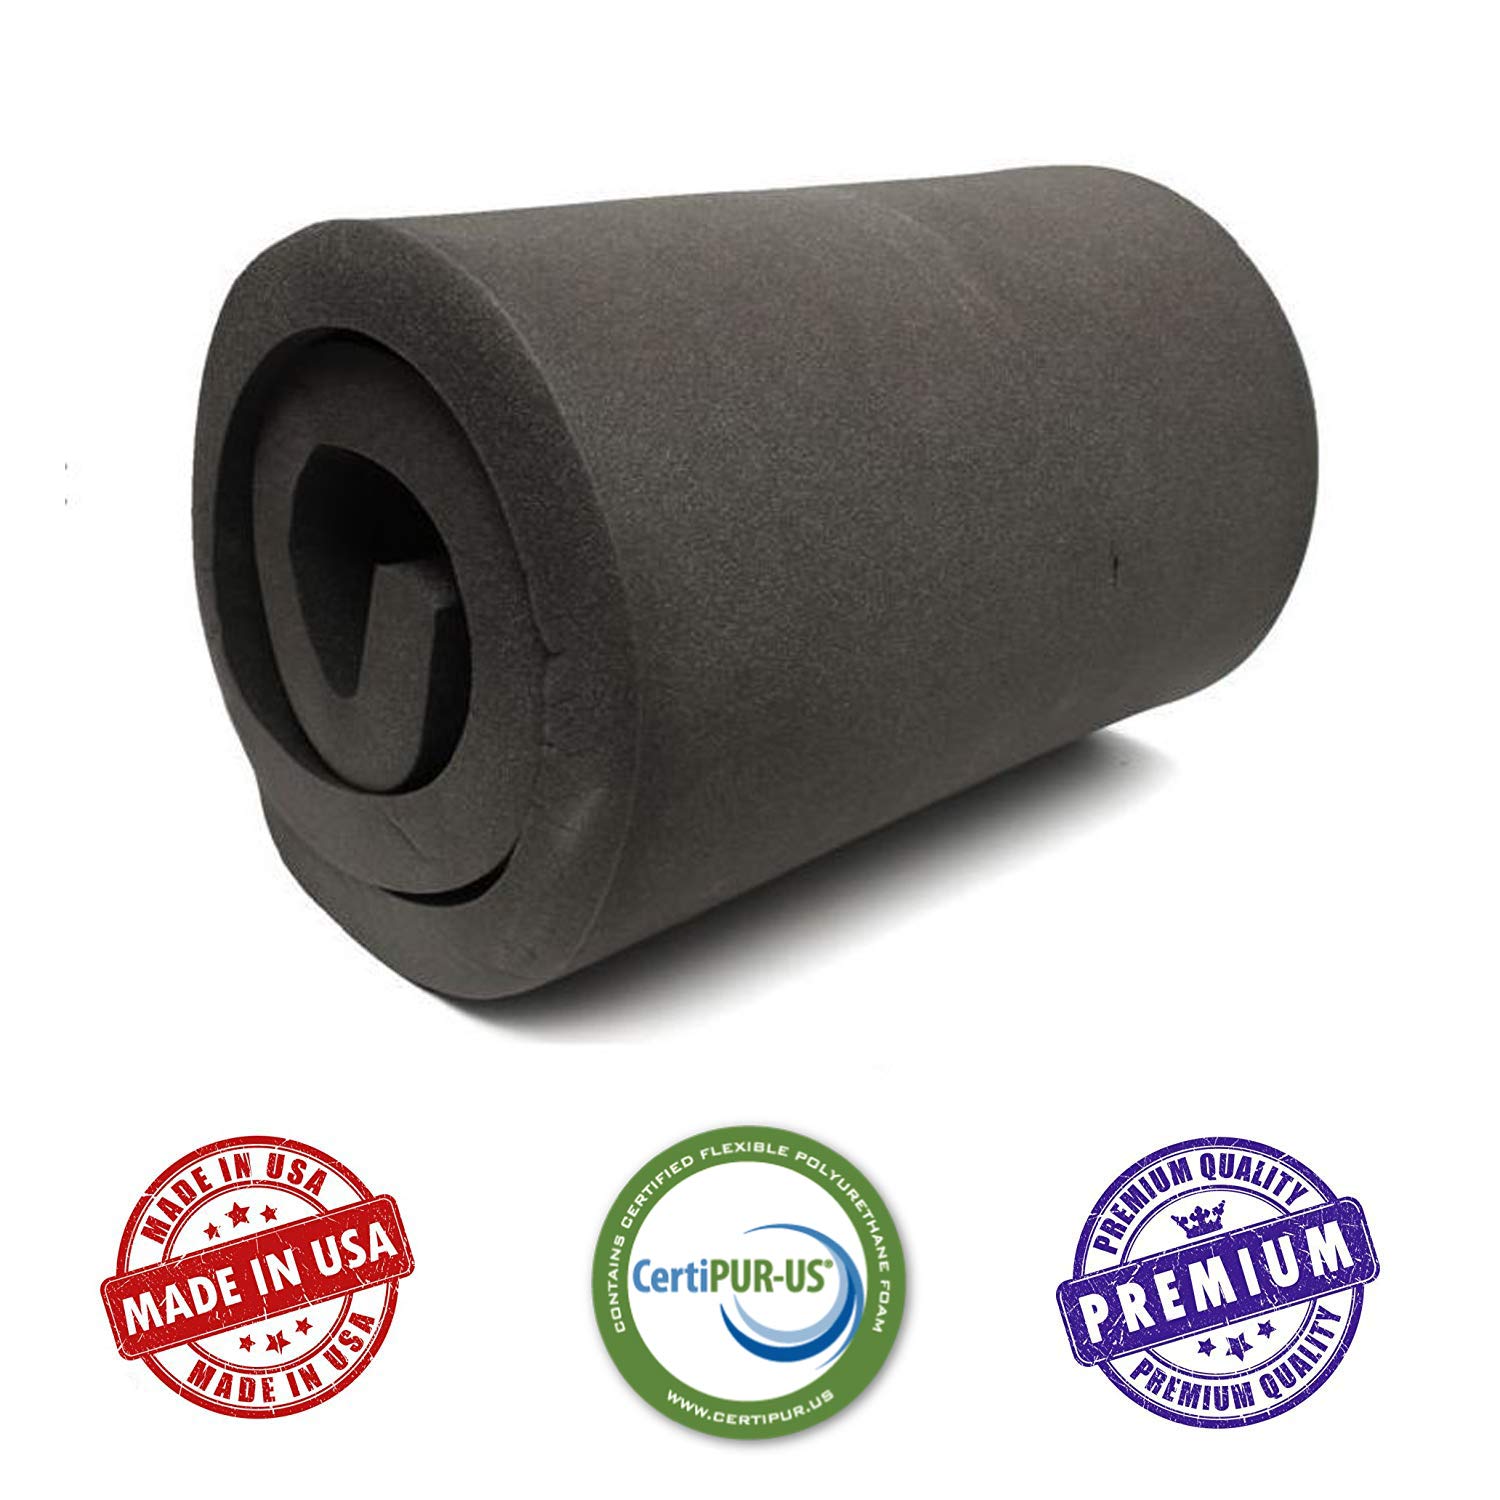 AKTRADING CO. CertiPUR-US Certified Charcoal Rubber Foam Sheet Cushion (Seat Replacement, Upholstery Sheet, Foam Padding, Acoustic Foam Sheet) - 1